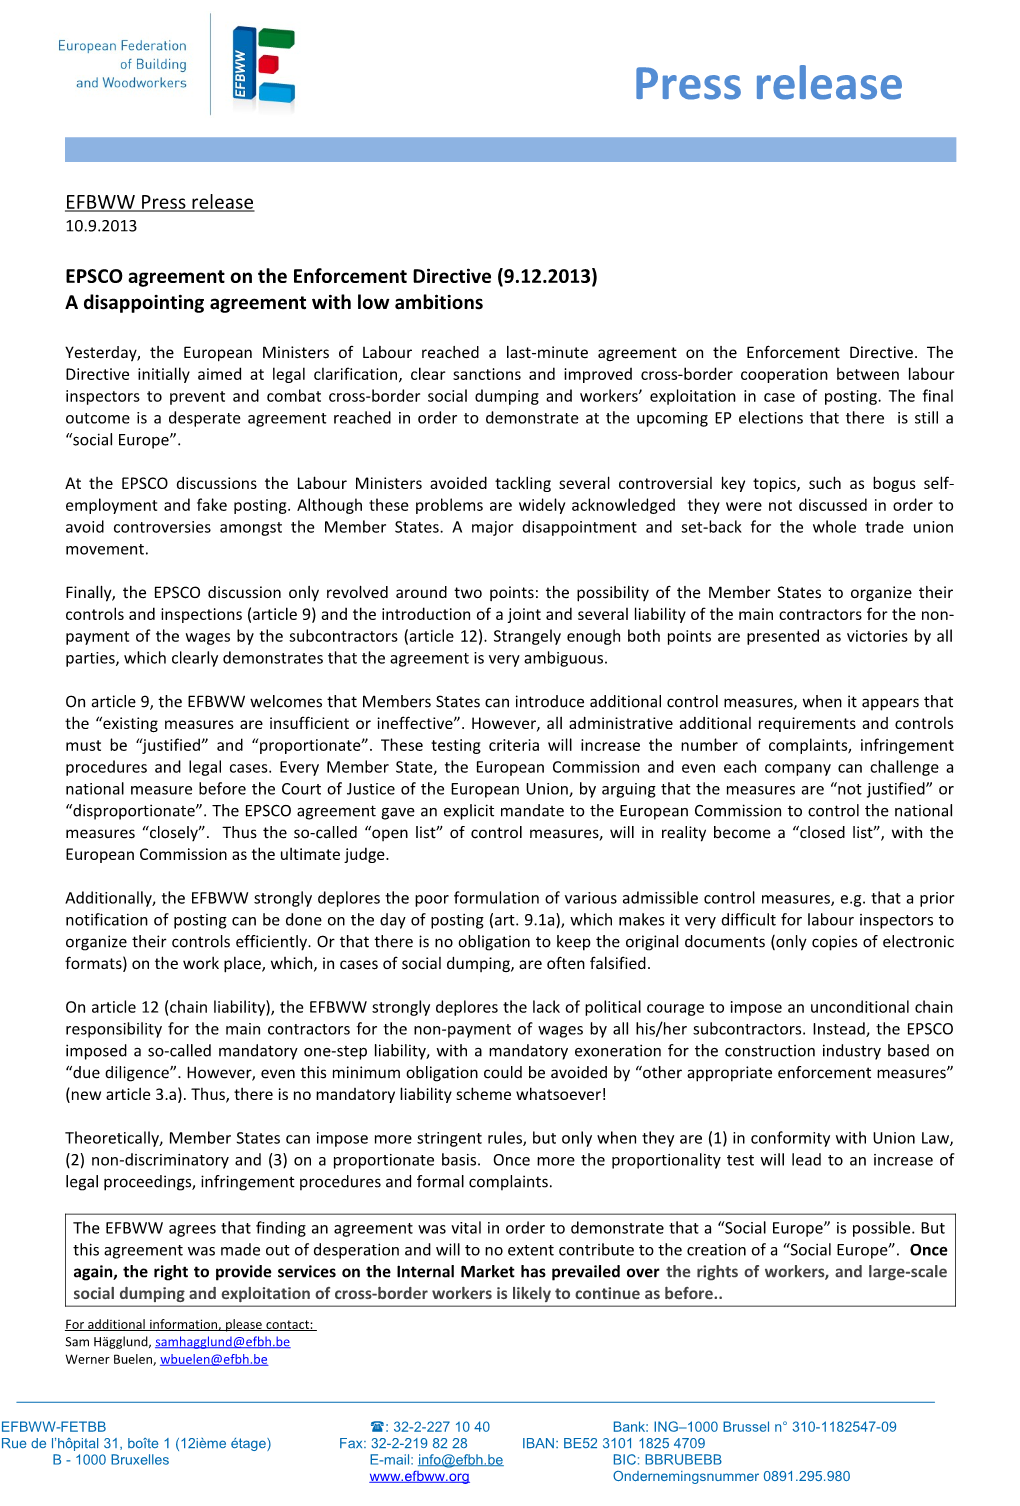 EPSCO Agreement on the Enforcement Directive (9.12.2013)